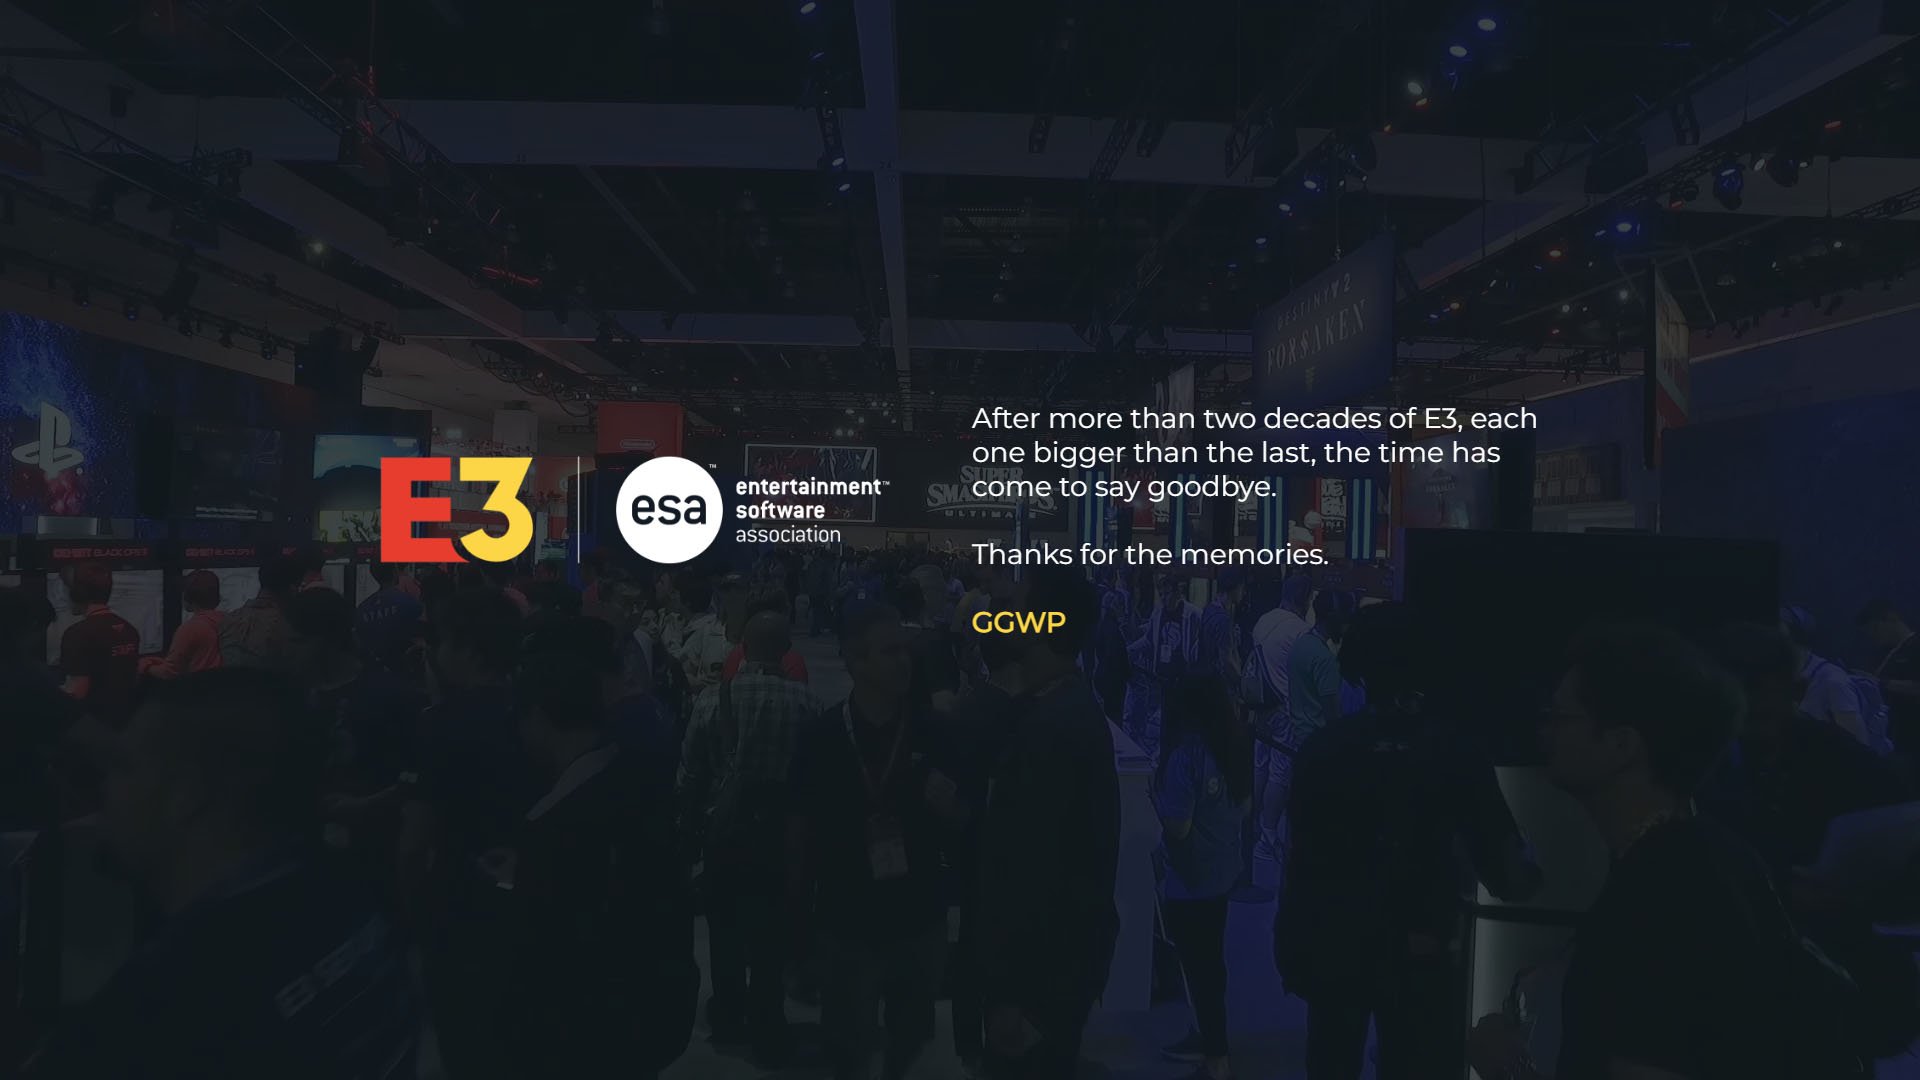 E3 is no more